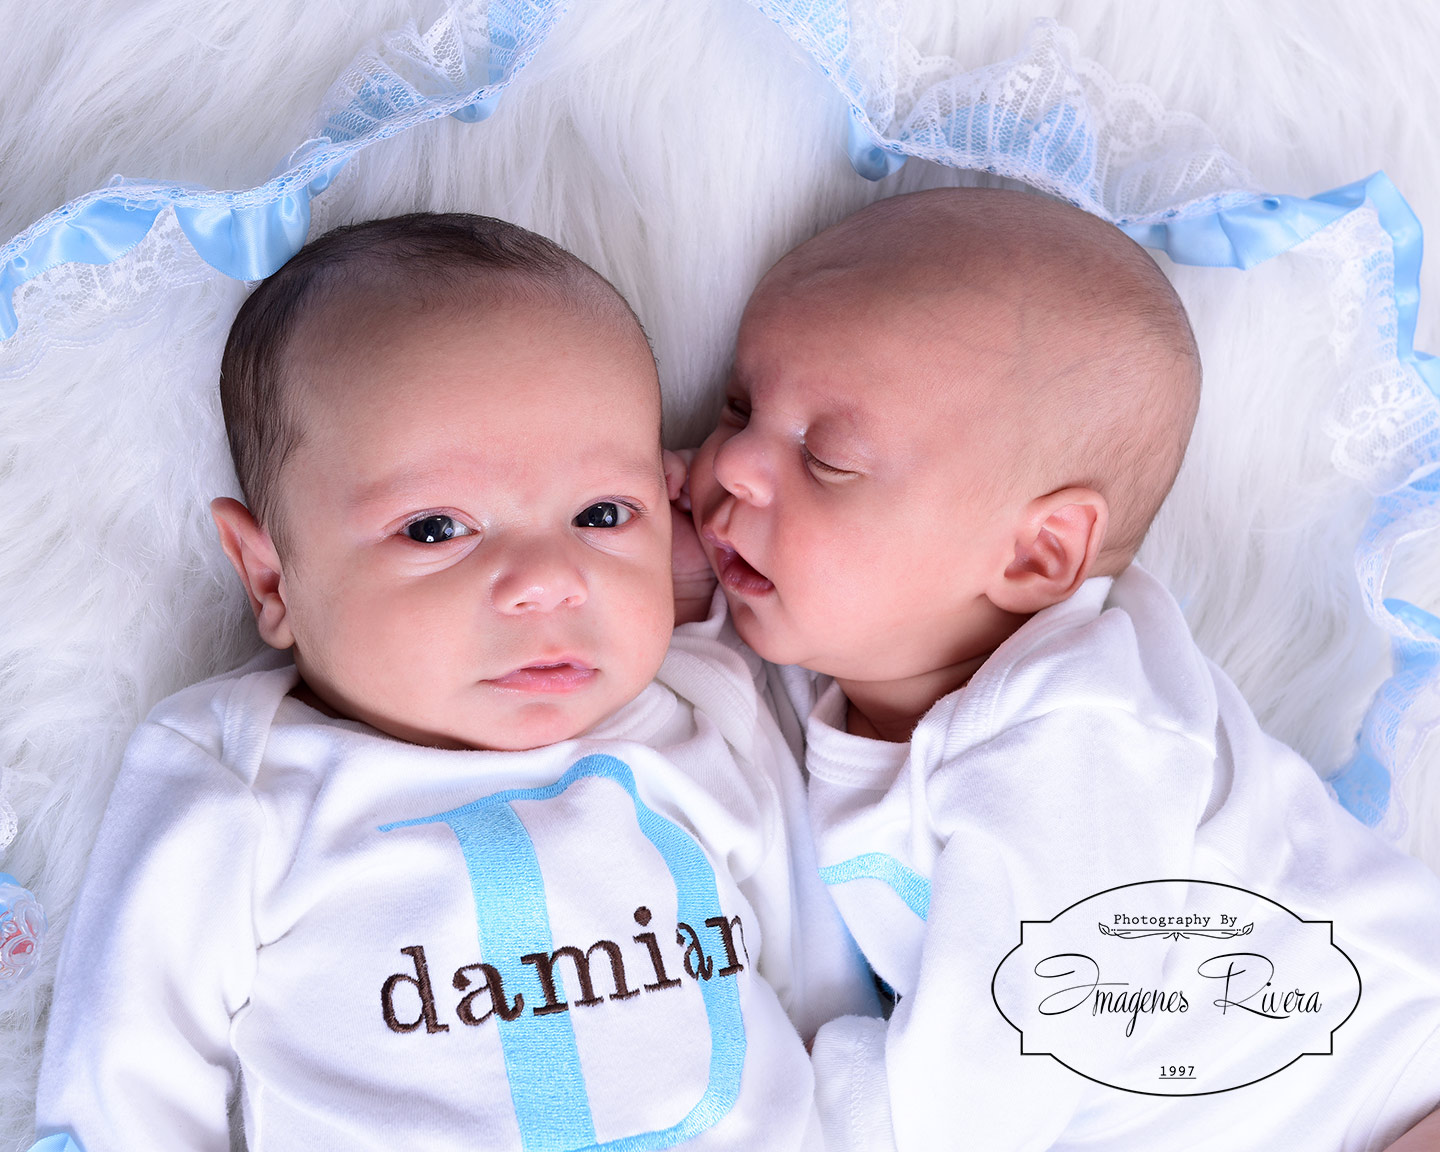 ♥ Denys & Damian twins newborn photography | Imagenes Rivera ♥